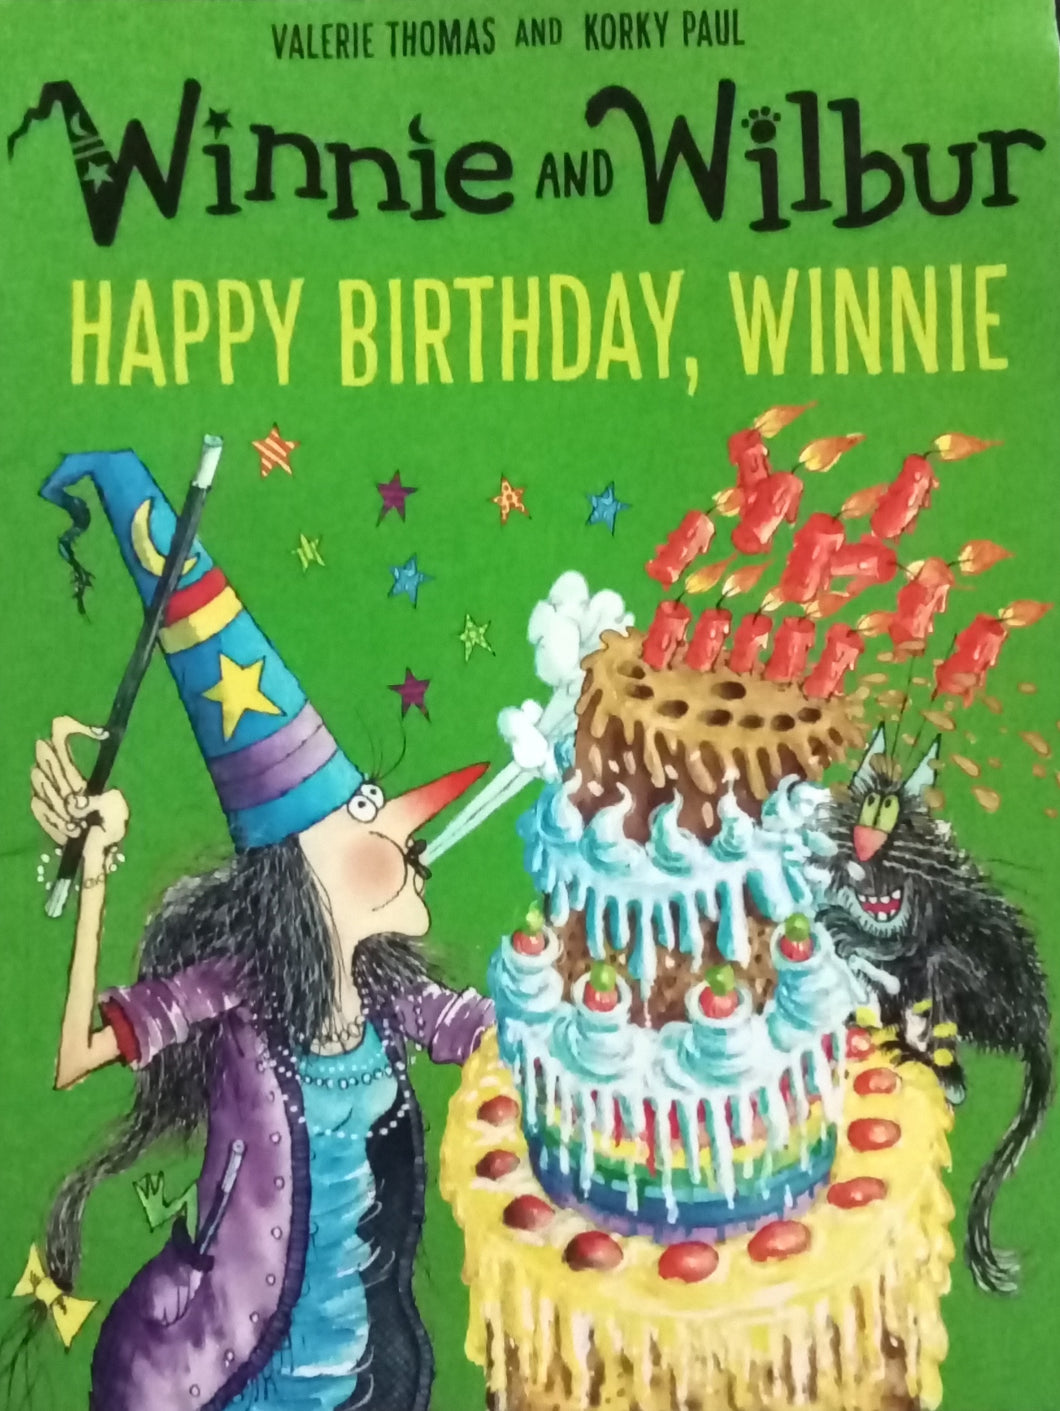 Winnie and Wilbur Happy Birthday, Winnie by Valerie Thomas